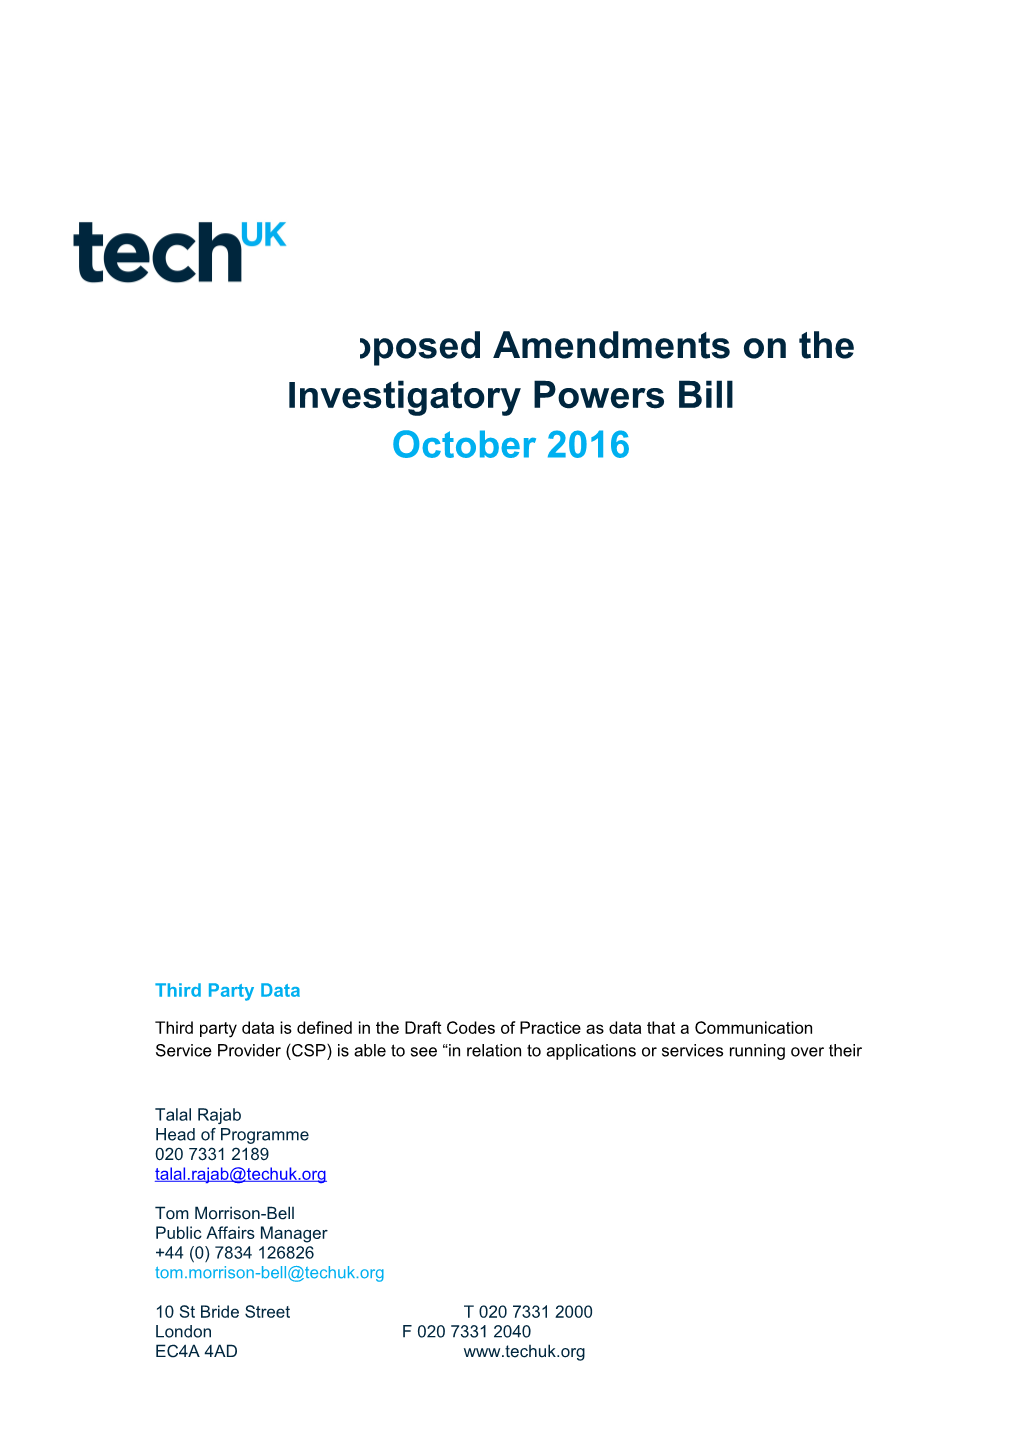 Techuk Proposed Amendments on the Investigatory Powers Bill